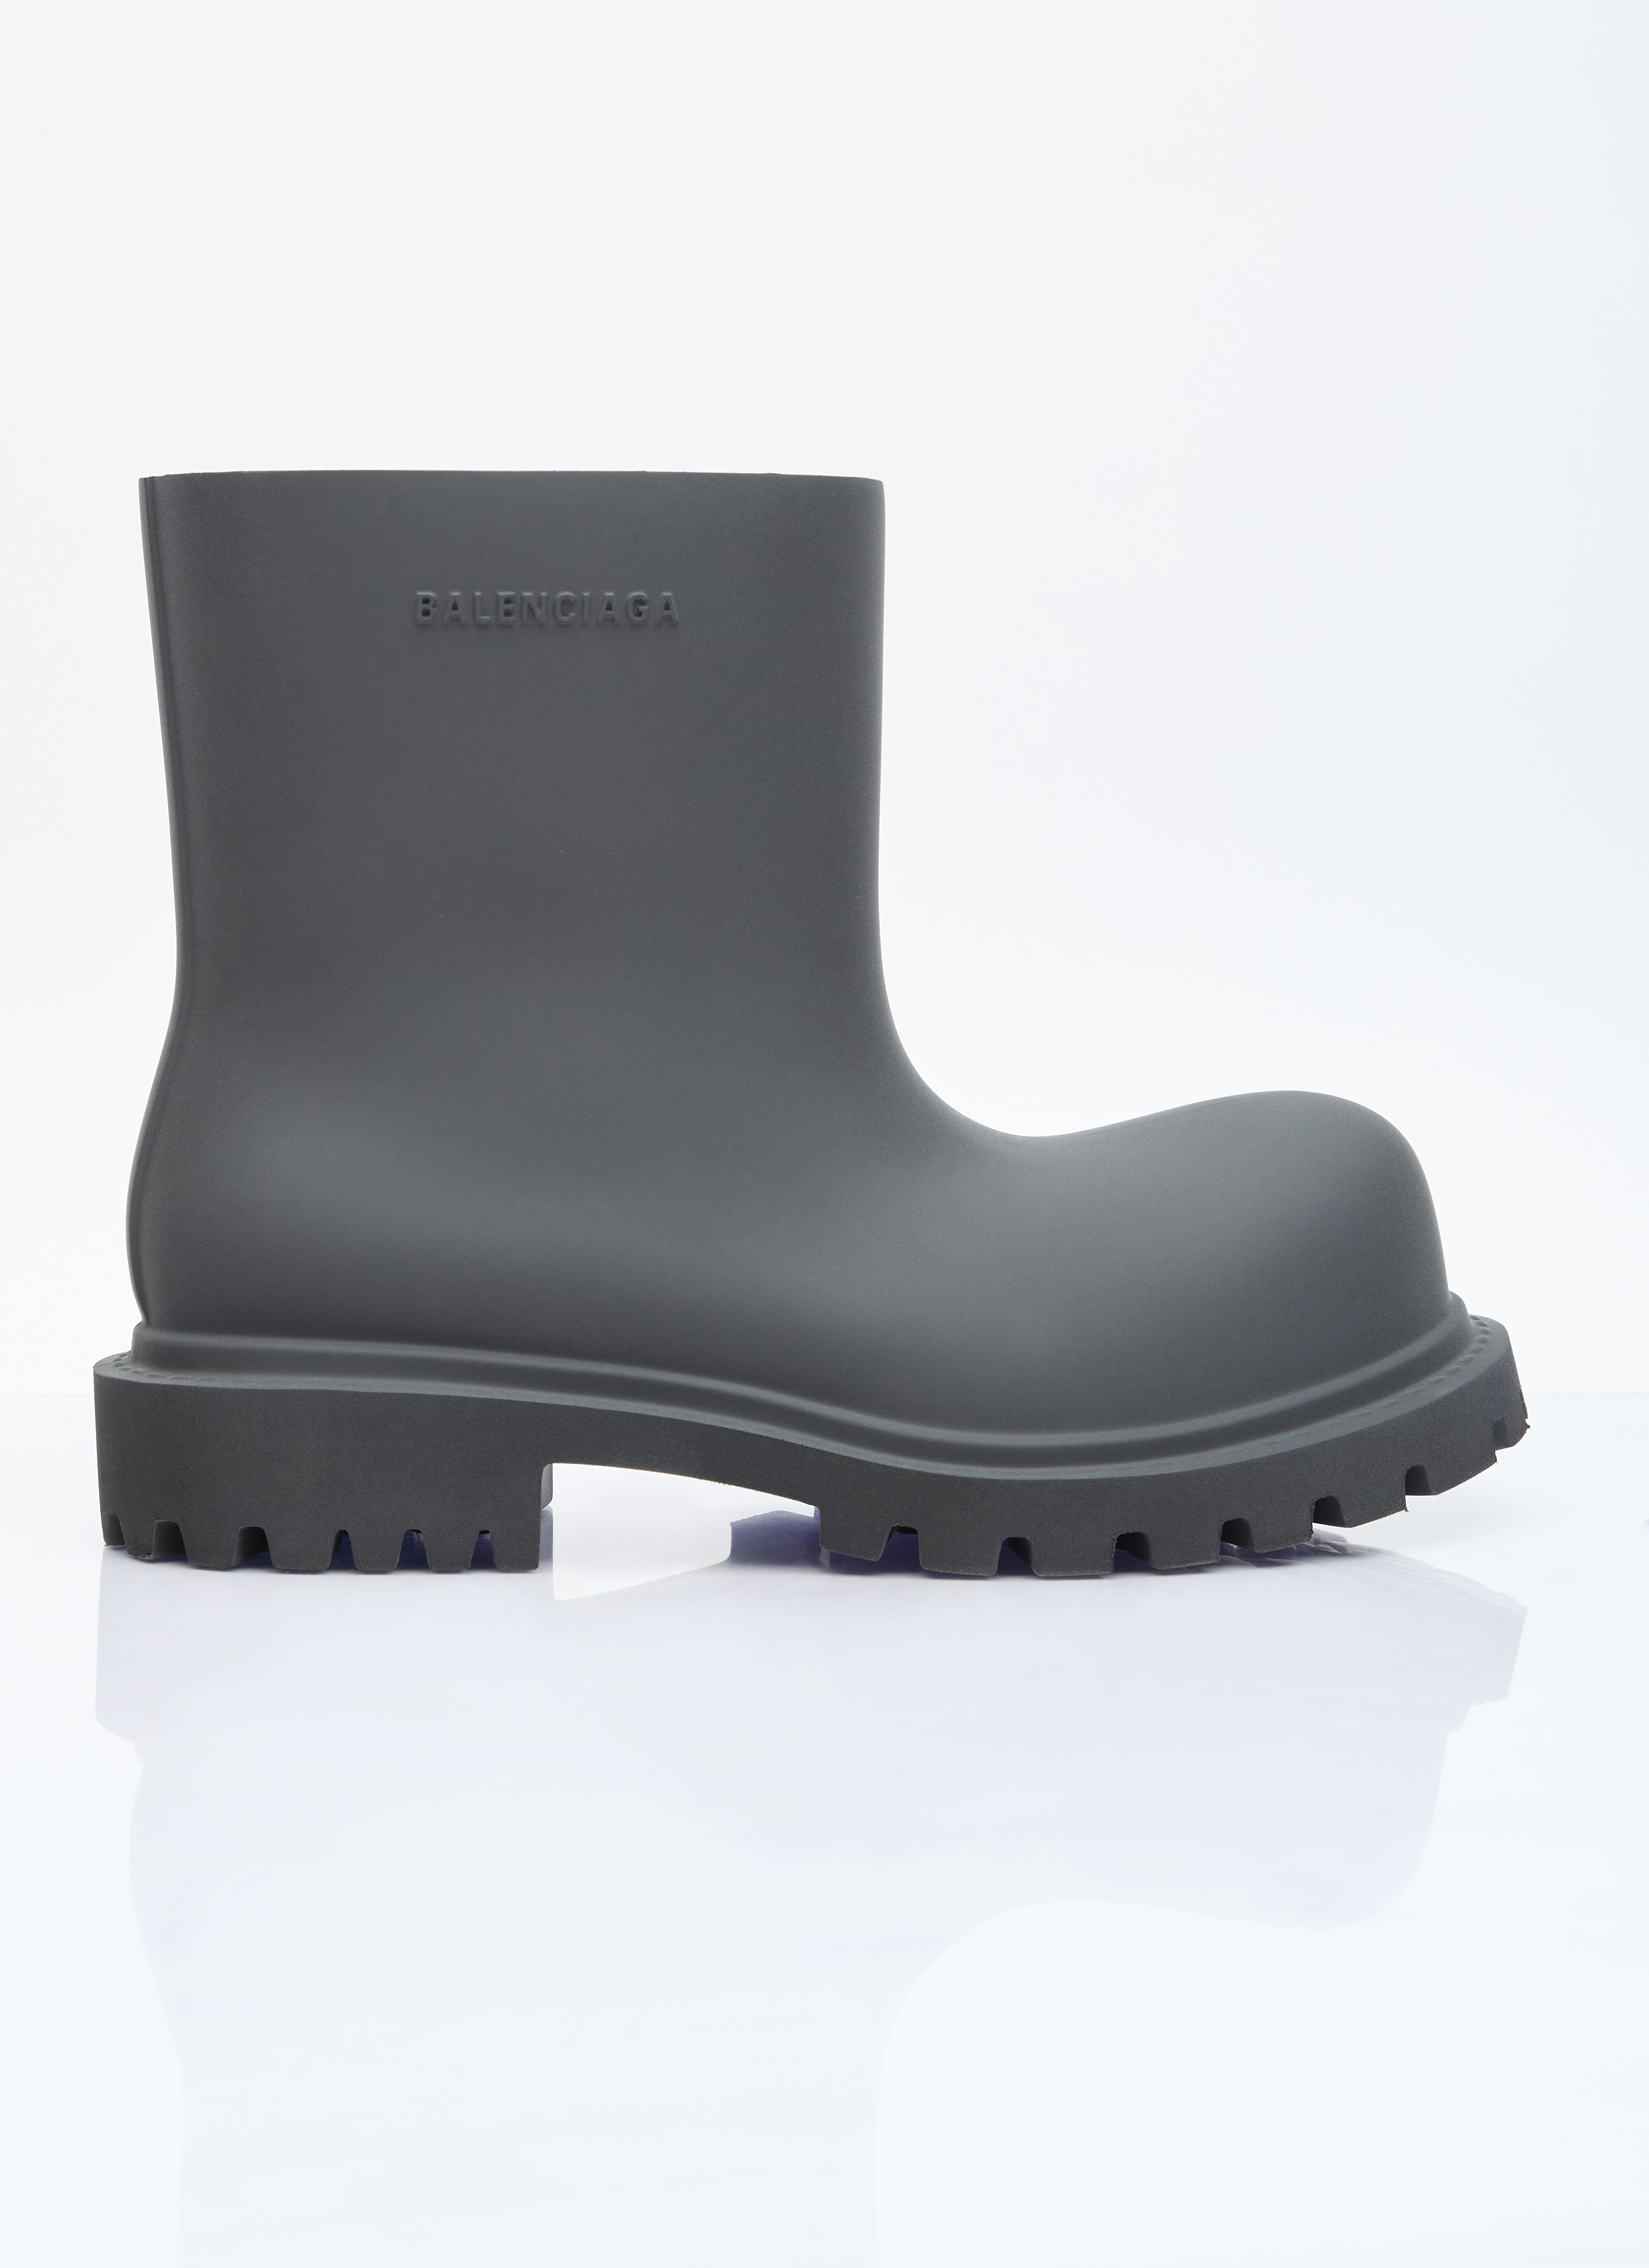 Vivienne Westwood Steroid Boots Grey vvw0156010